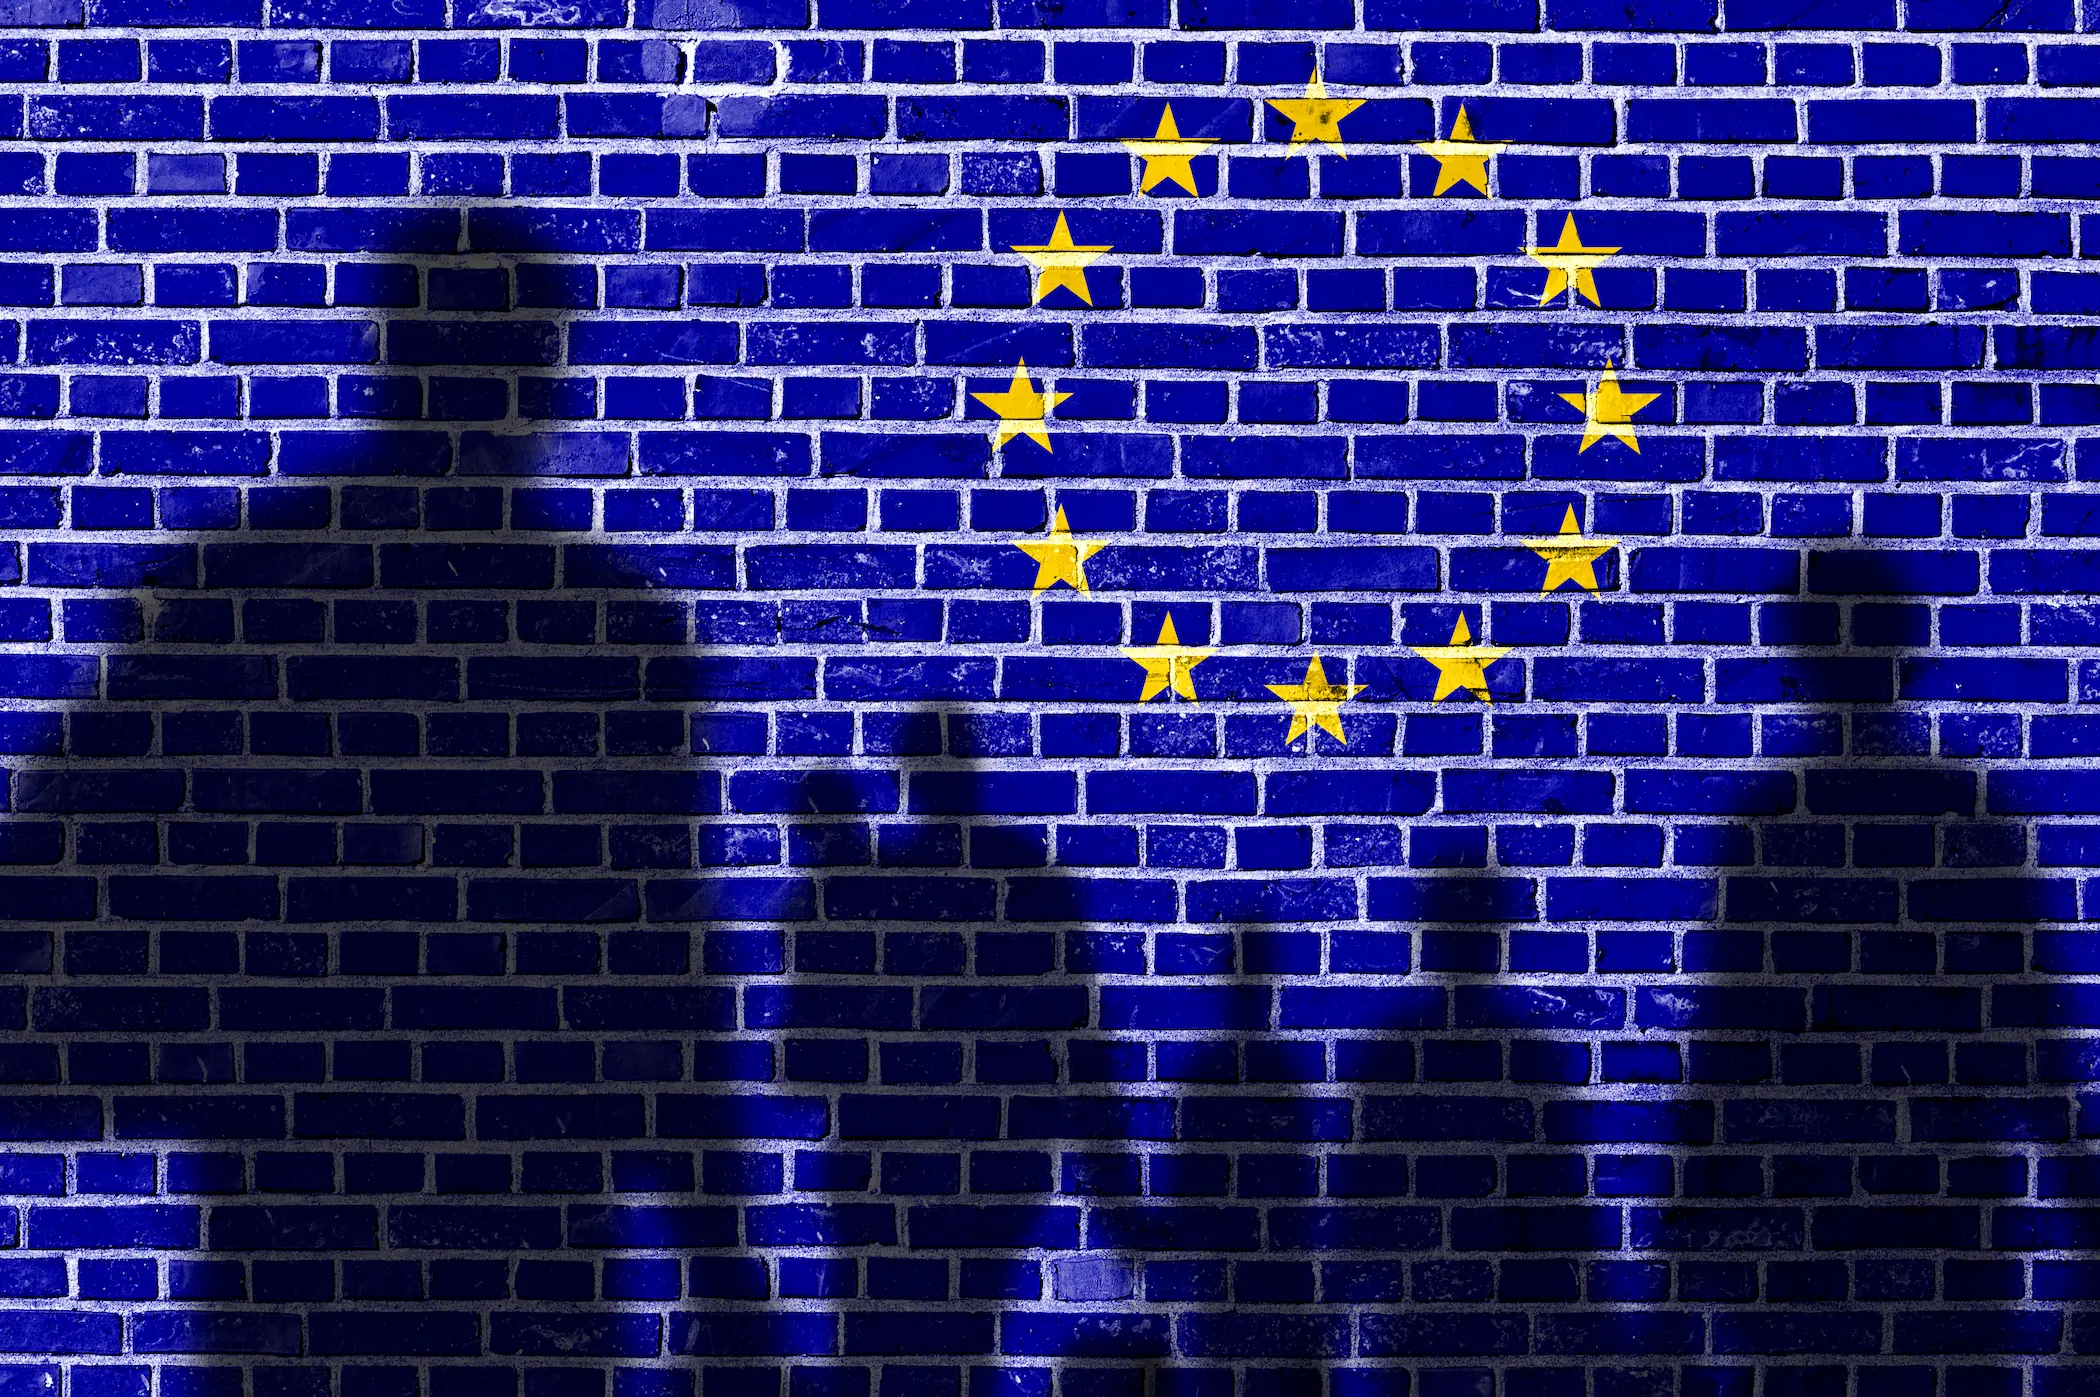 Migration: An Everlasting Variable in European Politics?